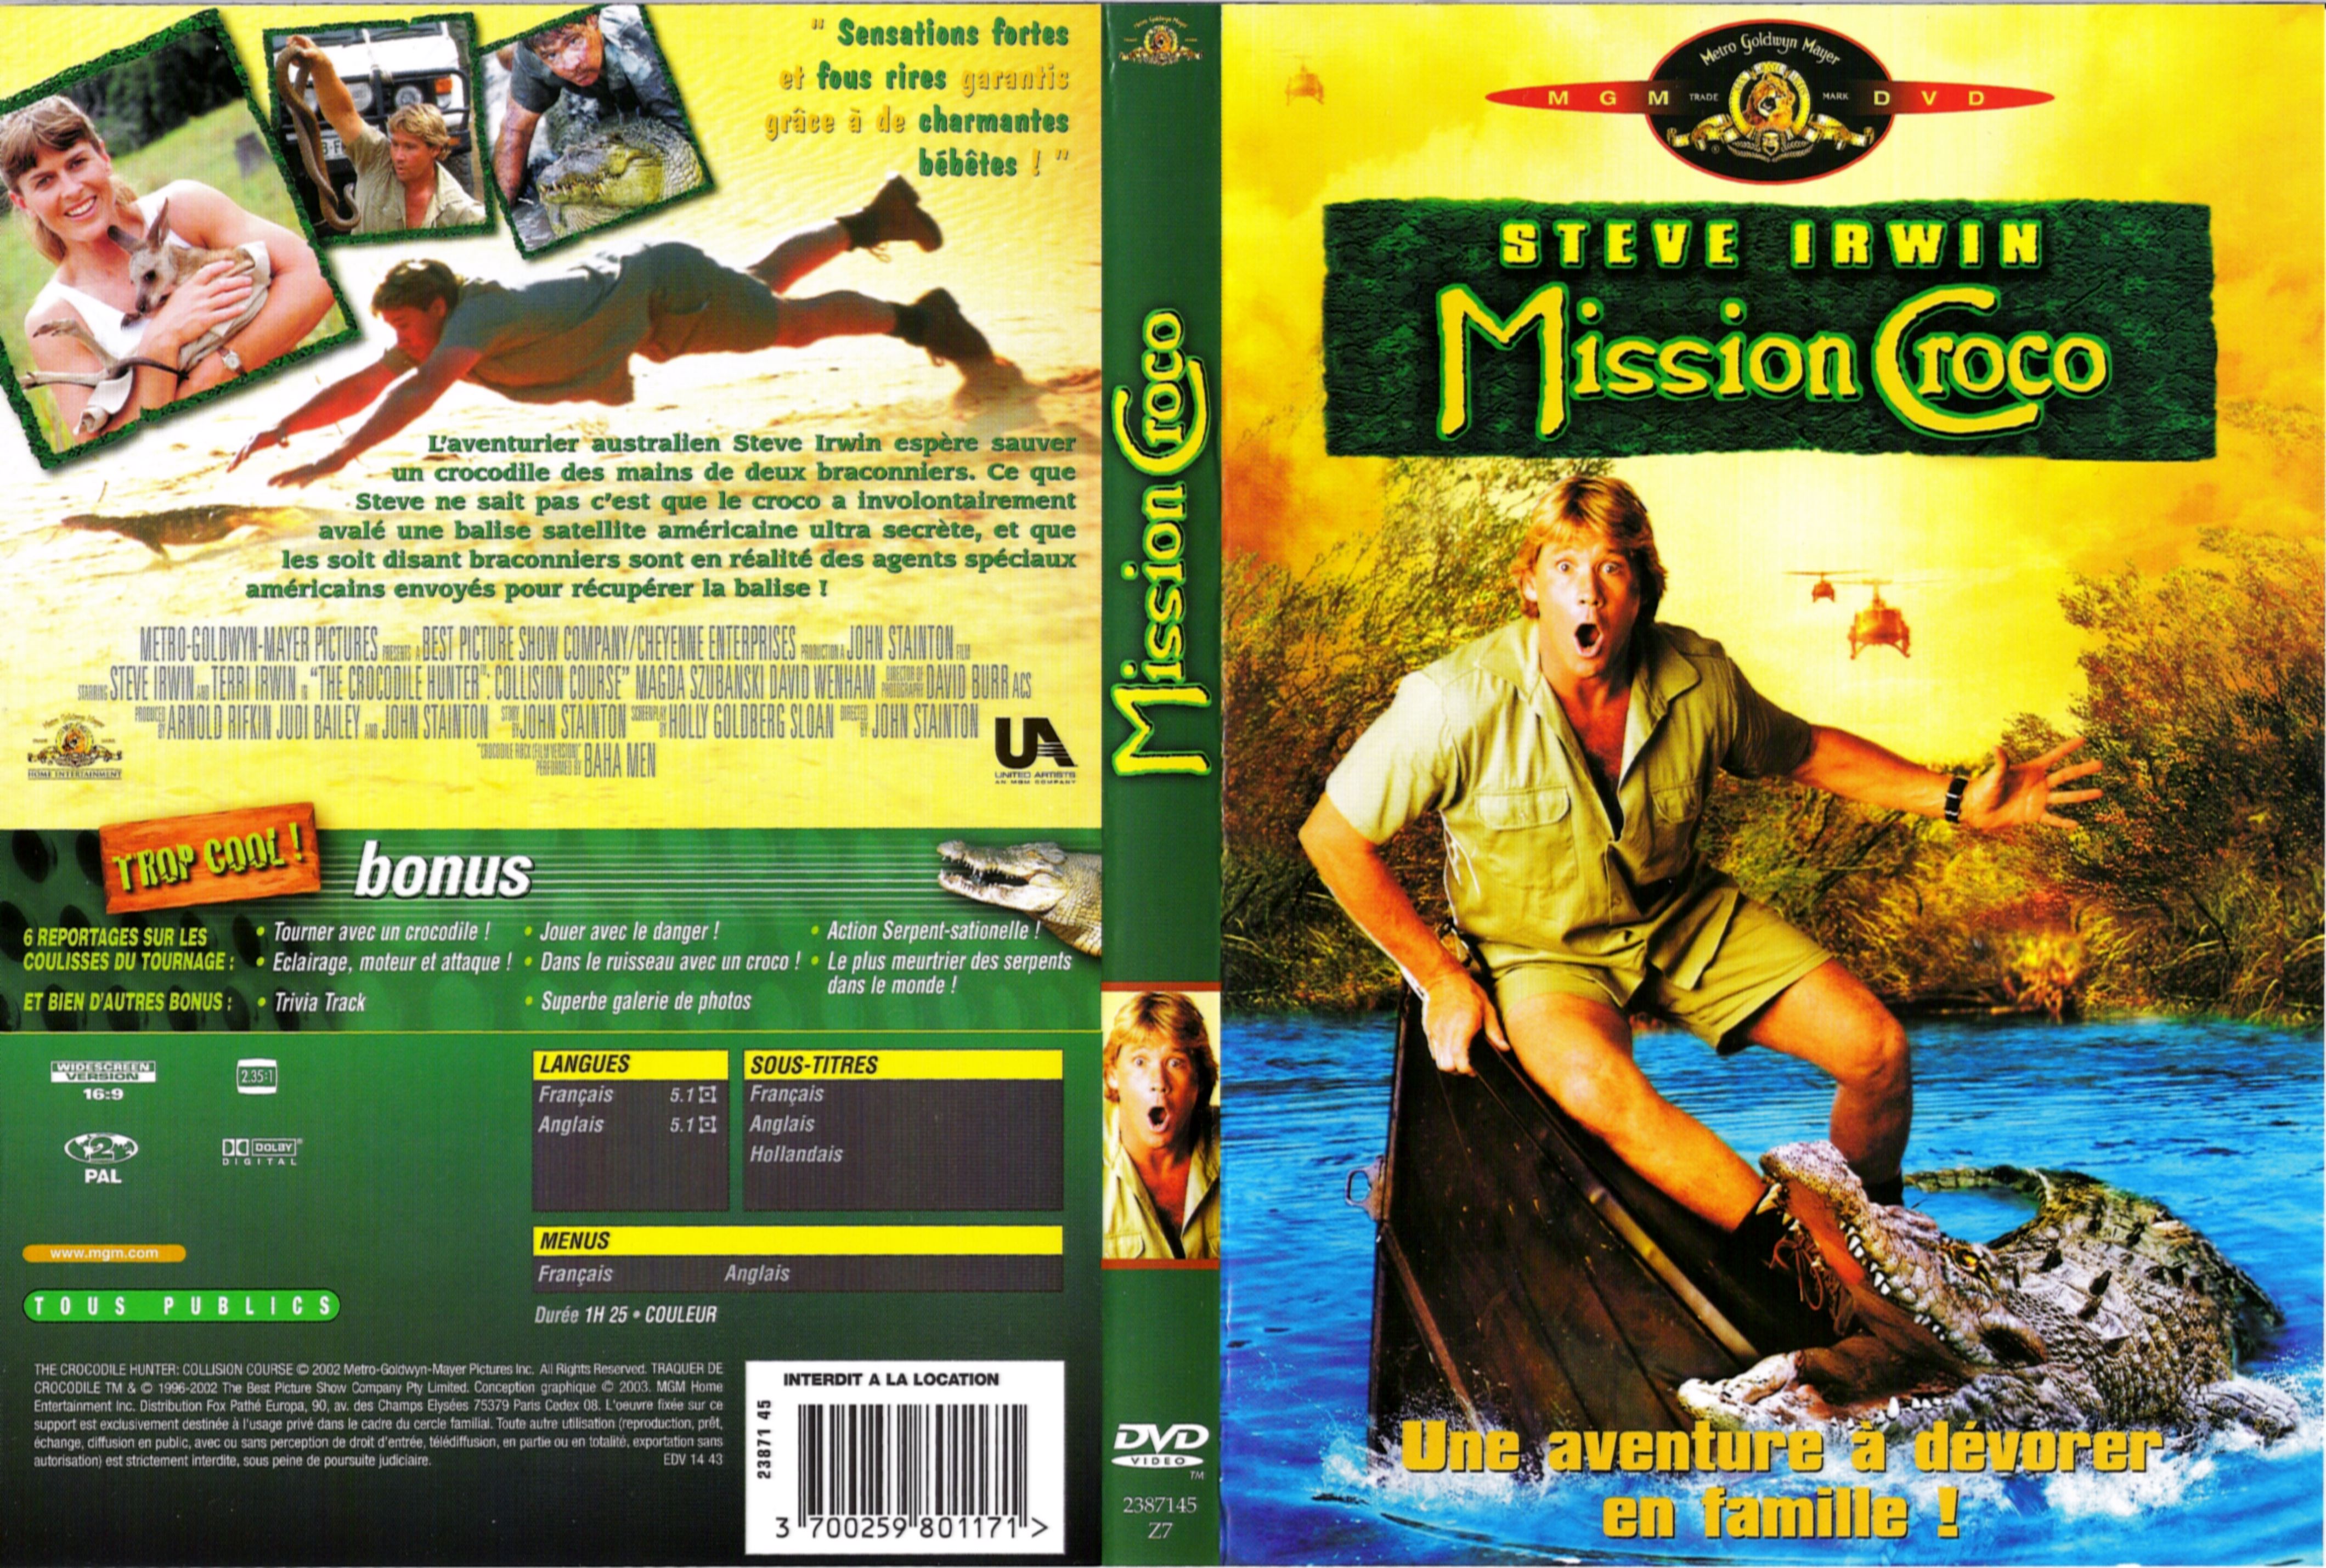 Jaquette DVD Mission croco v2